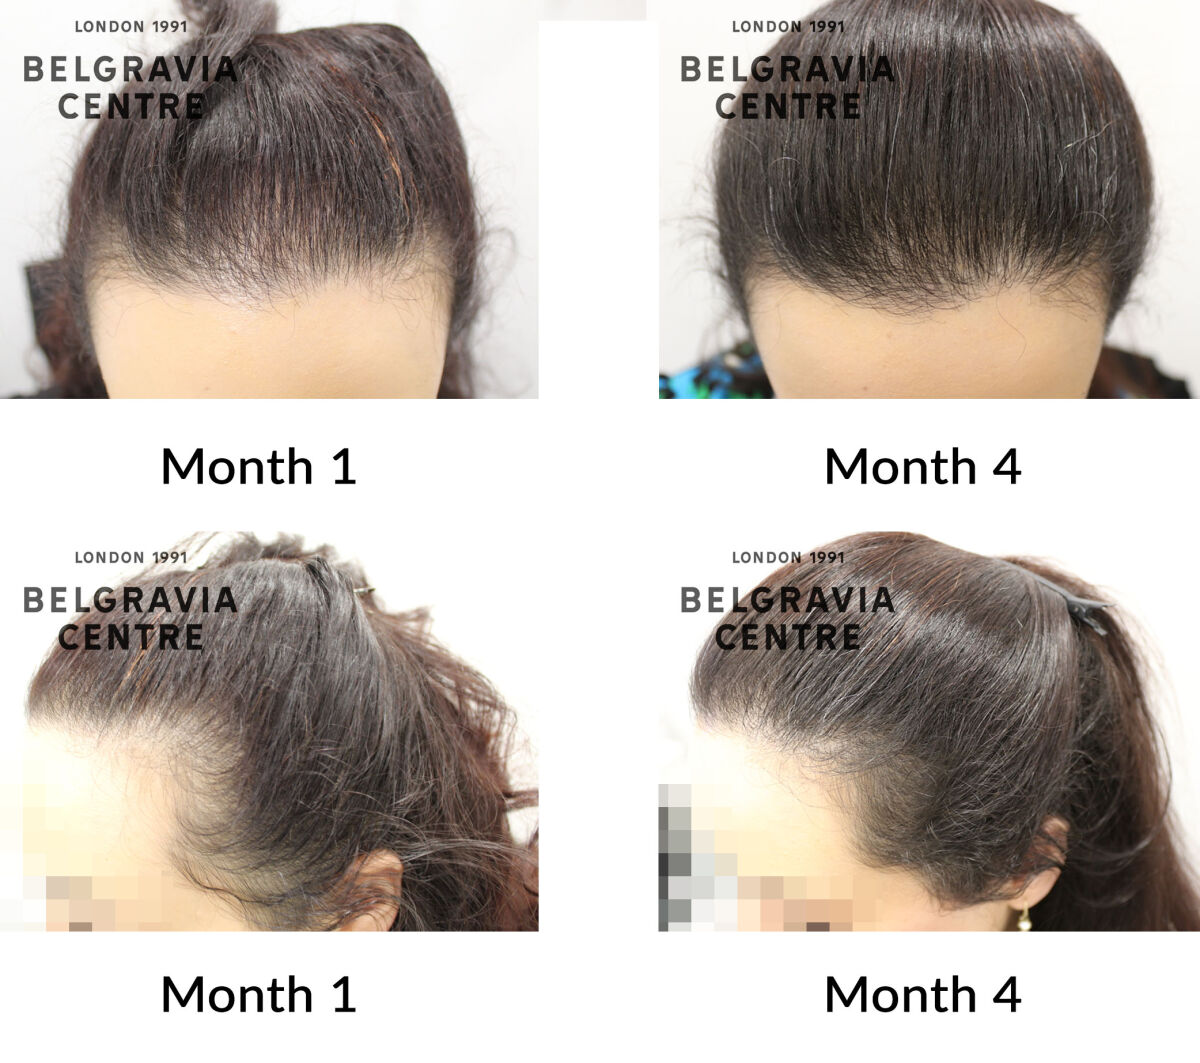 female pattern hair loss the belgravia centre 450532